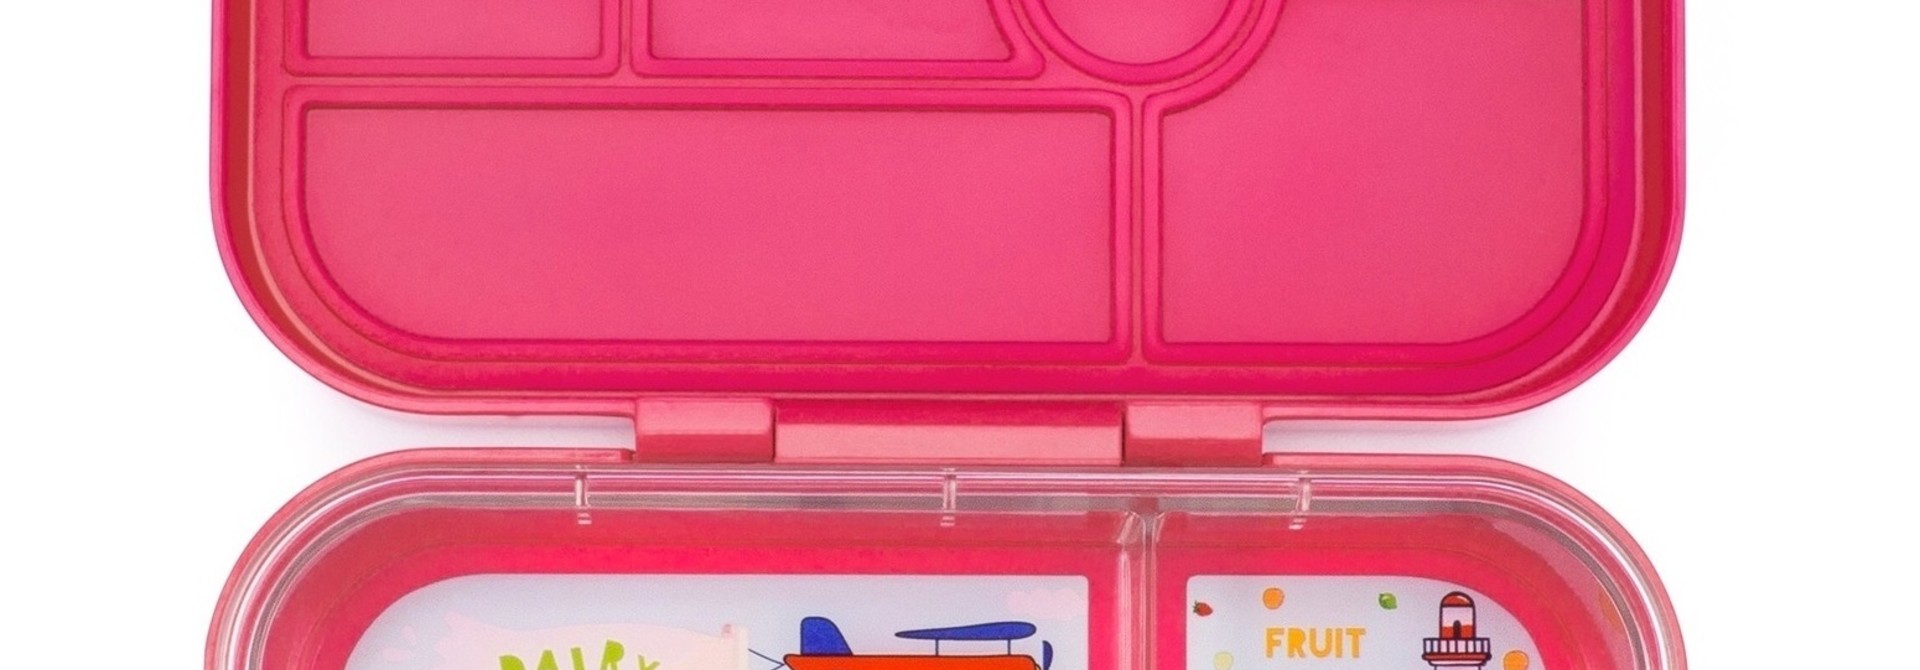 Yumbox Original - lekvrije Bento box lunchbox - 6 vakken - Lotus roze / Explore tray